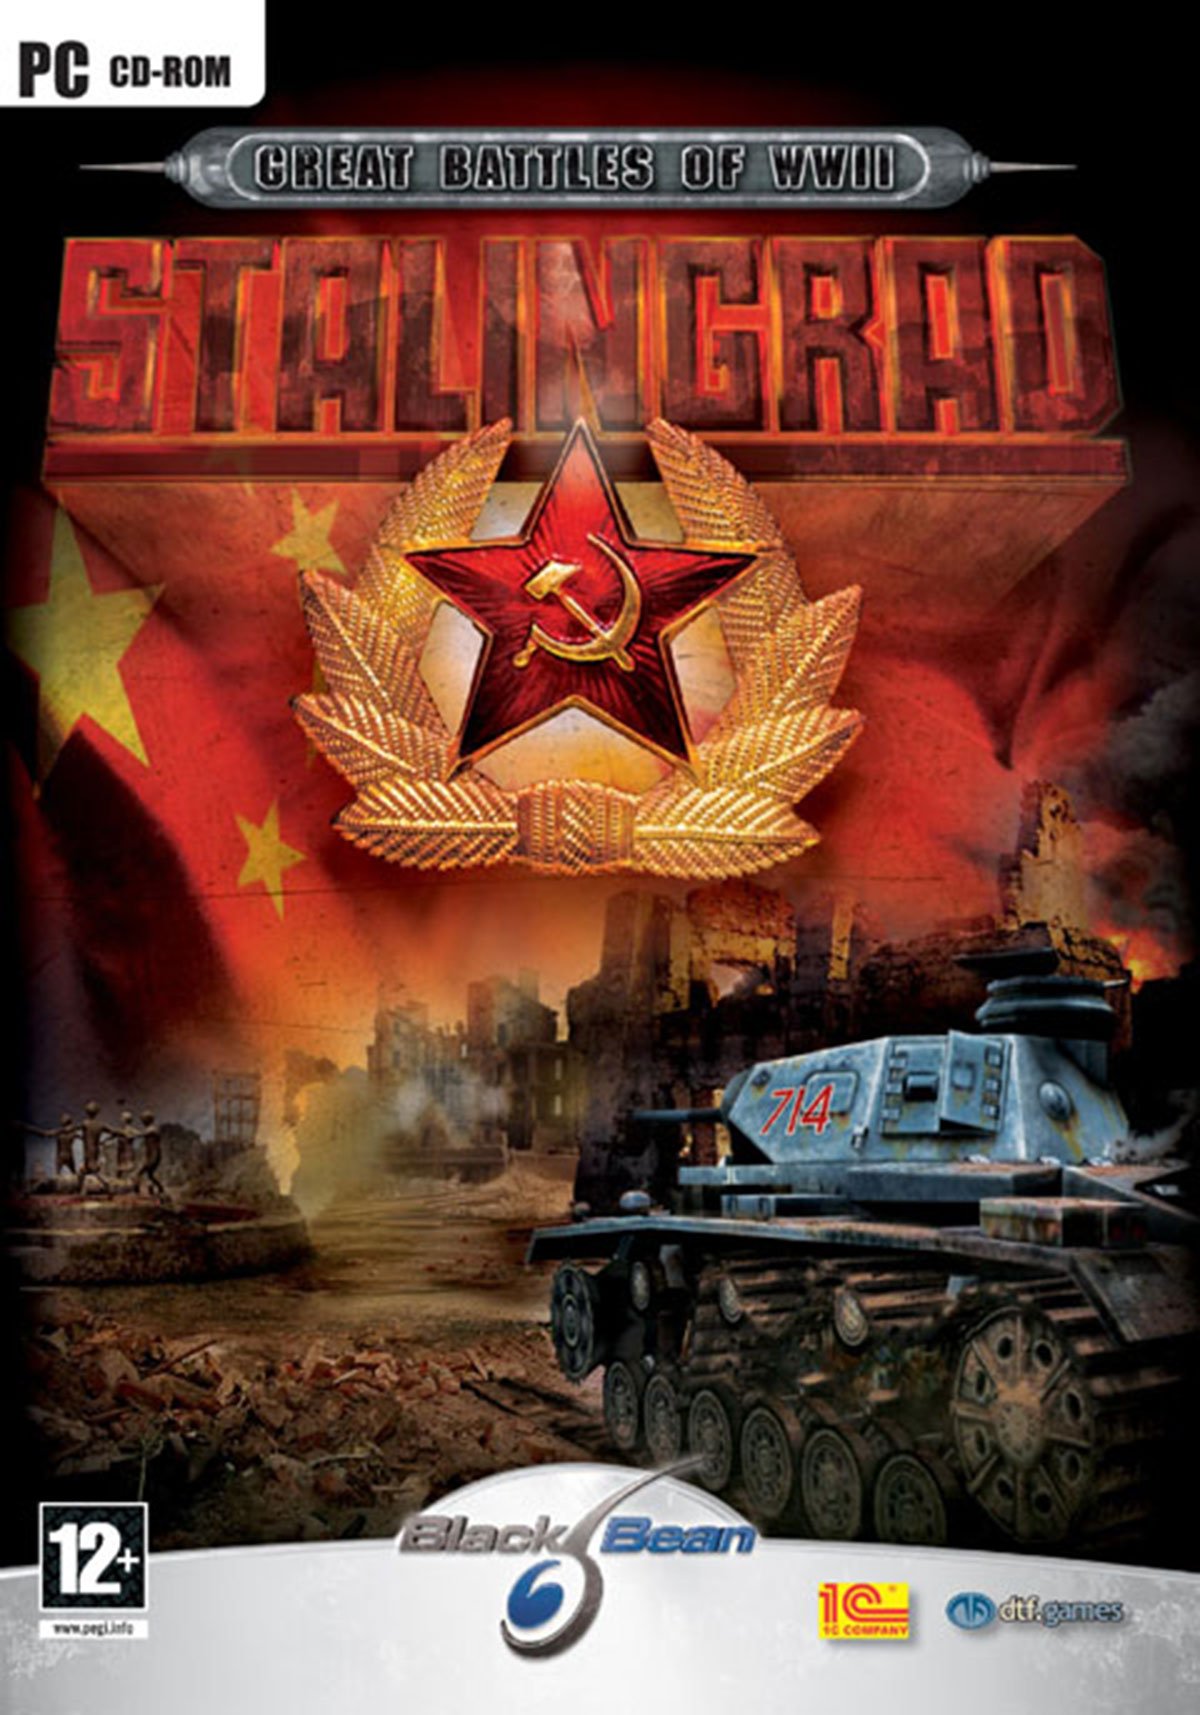 Image of Stalingrad